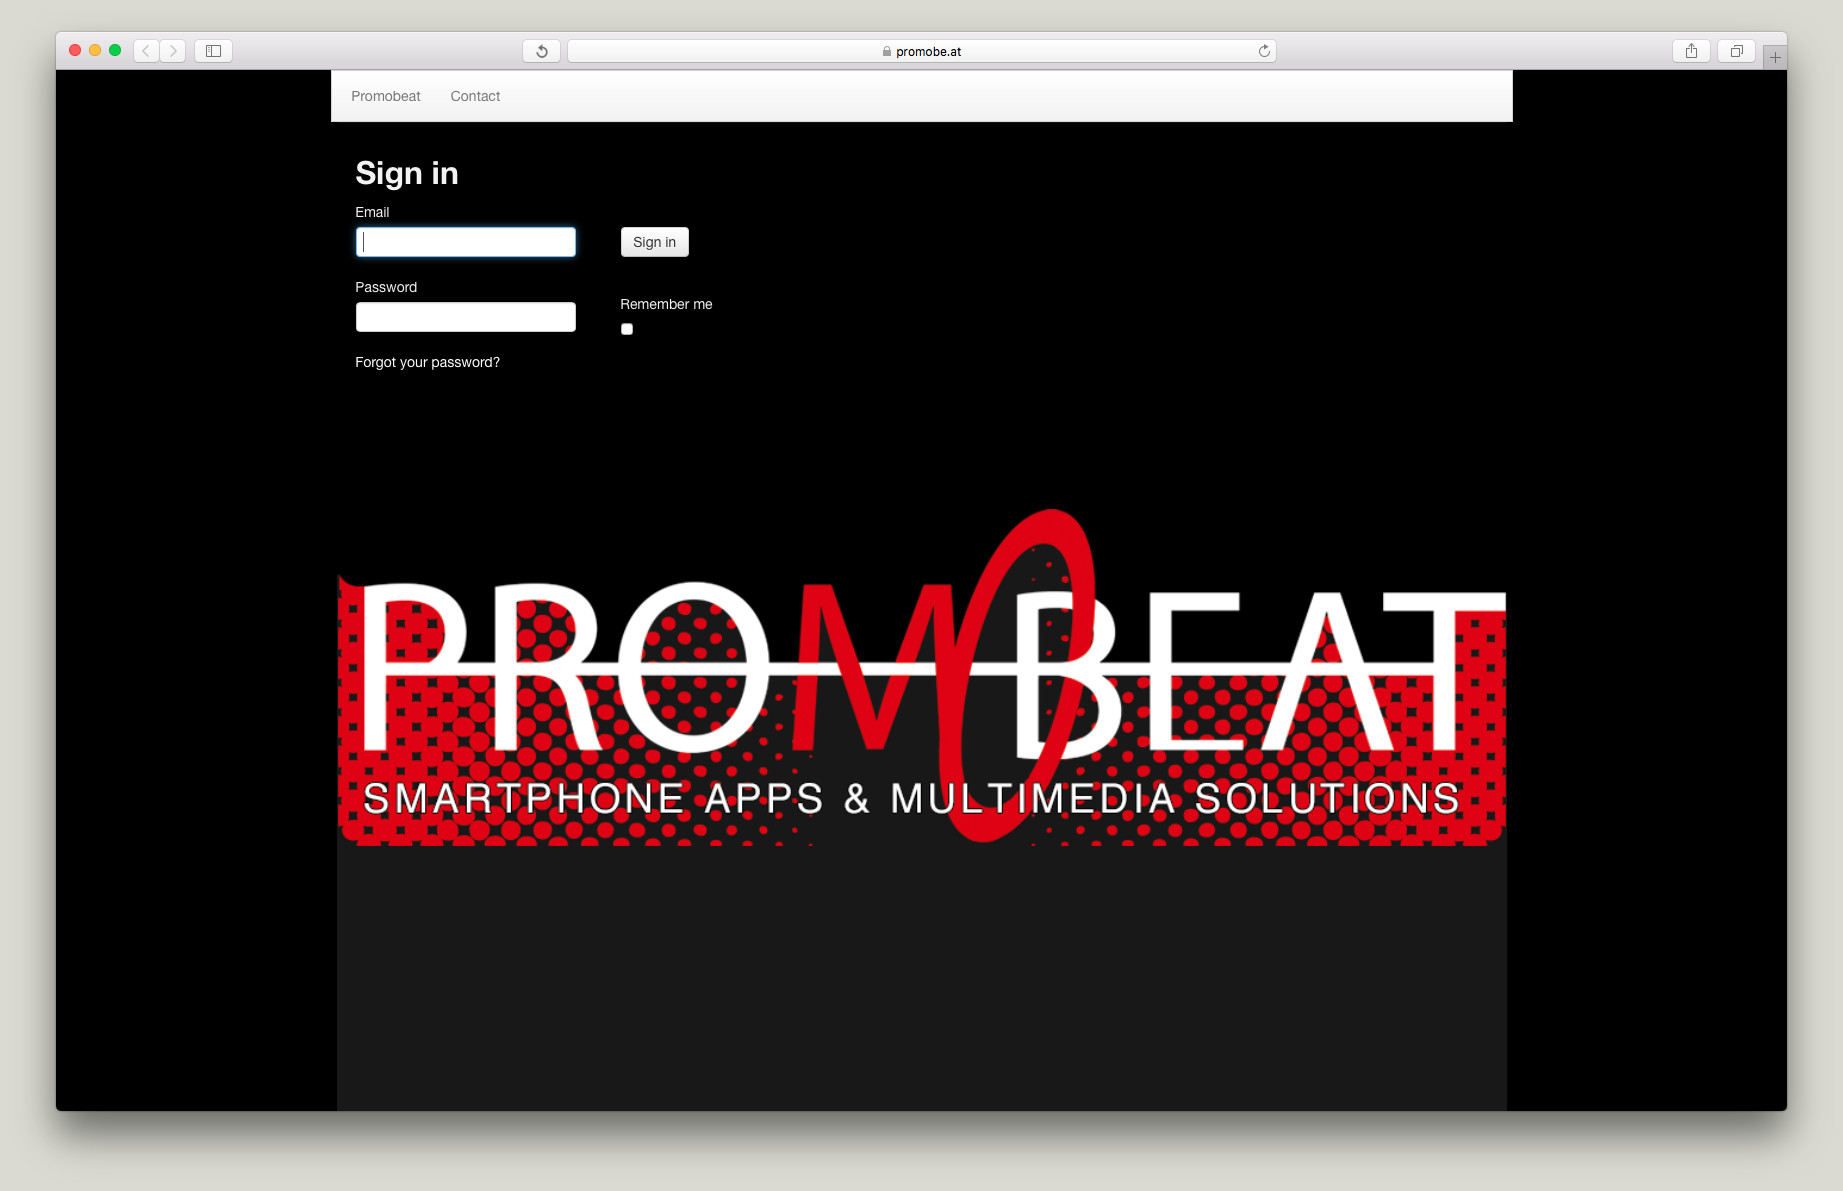 Promobeat – Multimedia smartphone apps